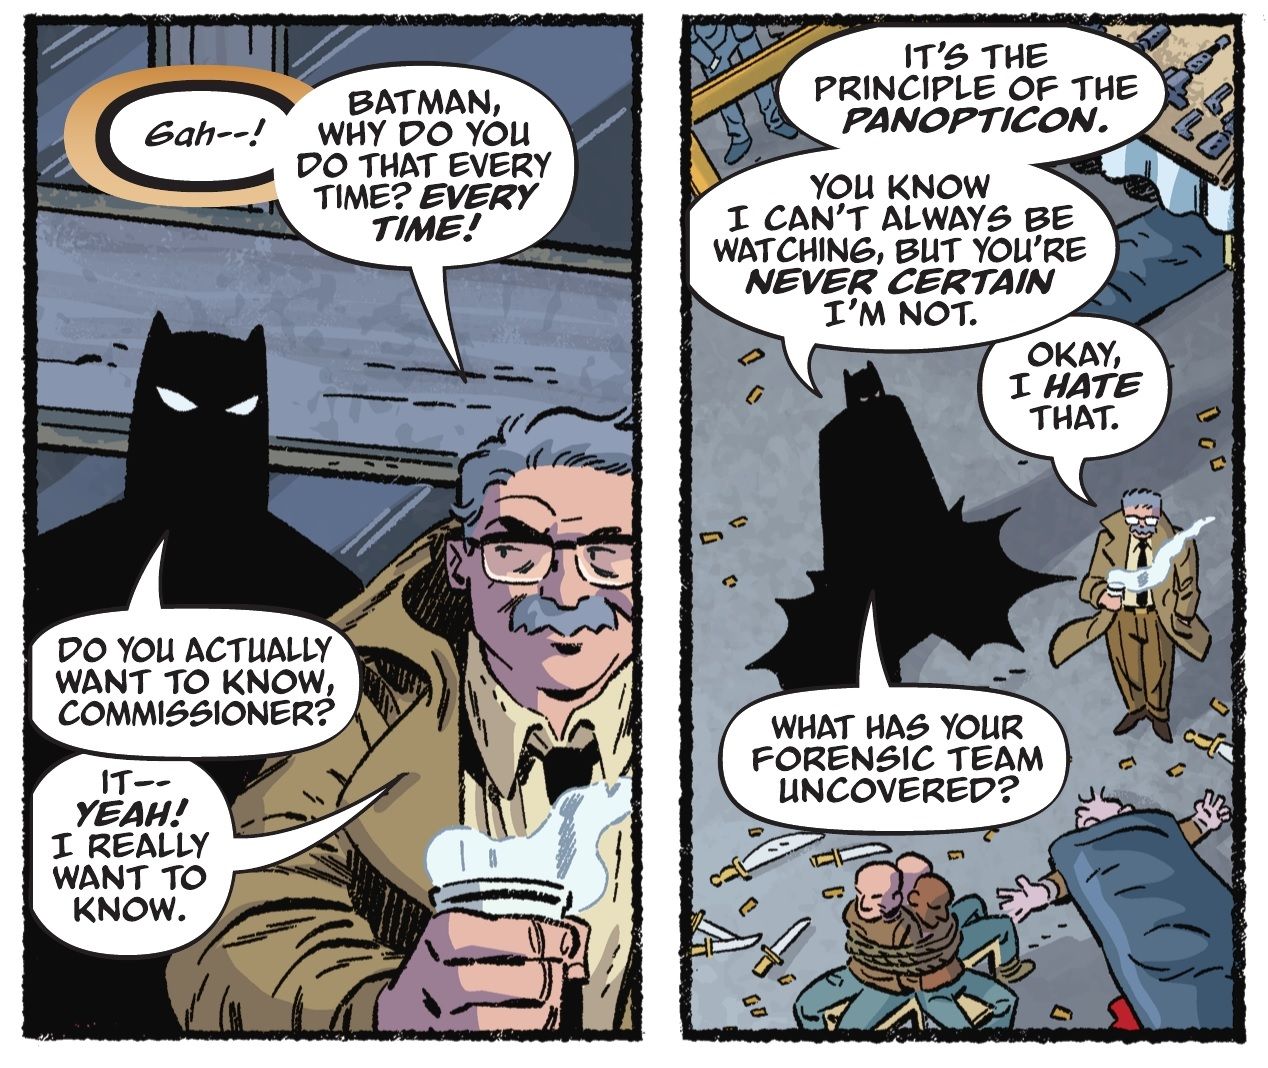 Batman tells Gordon why he always sneaks up on him